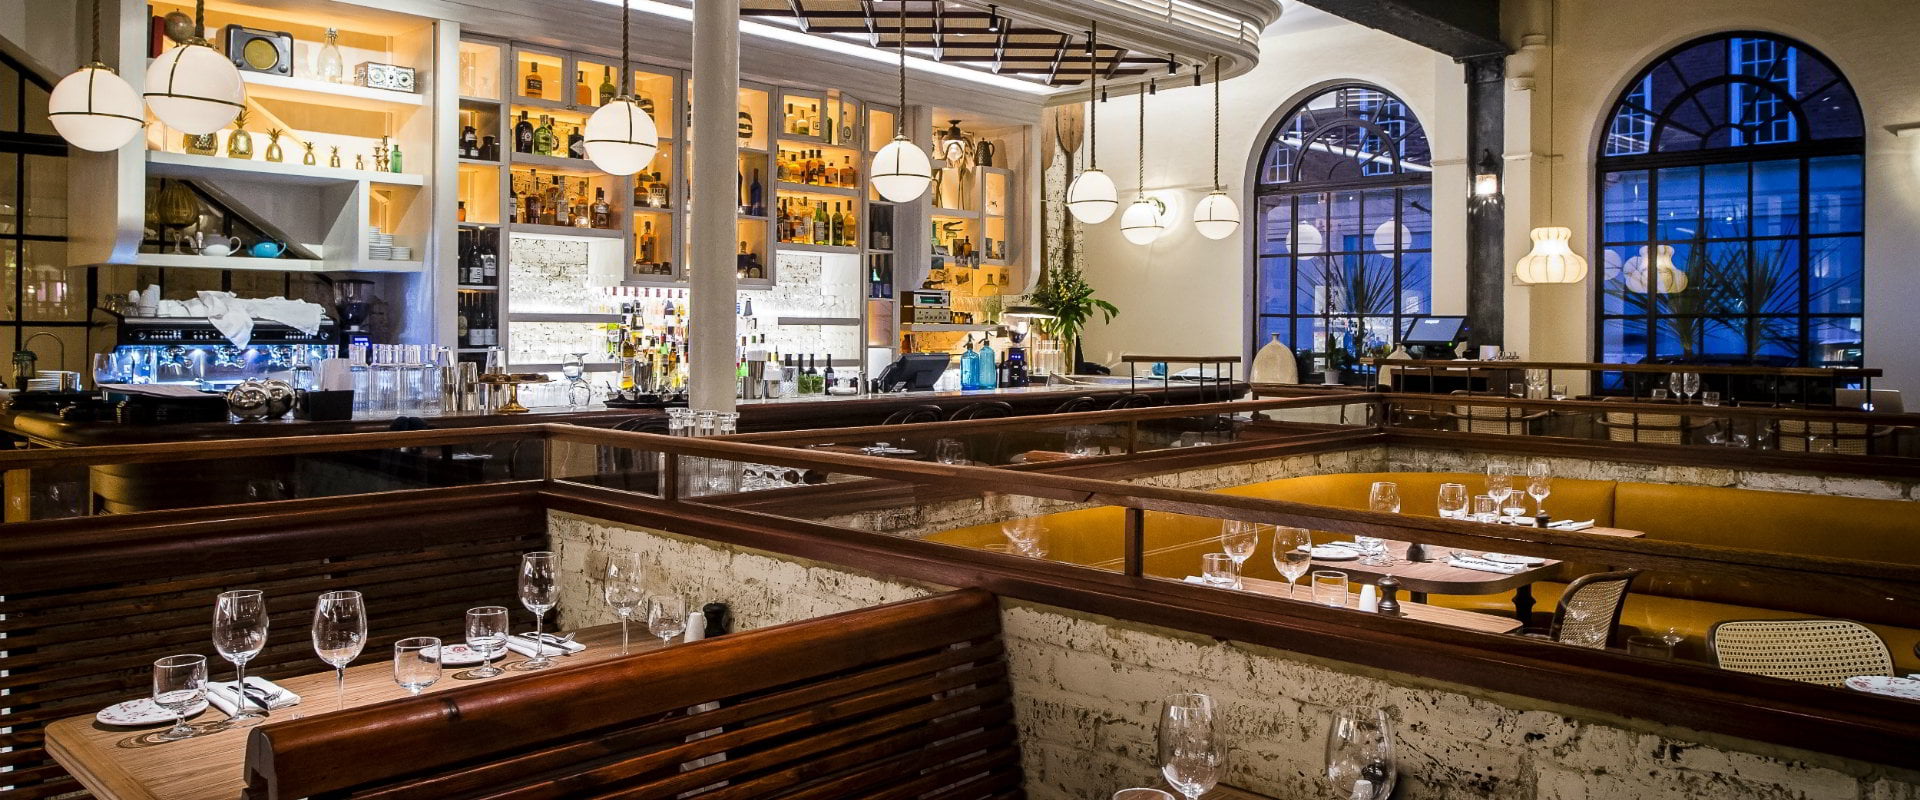 Blixen | Former Bank Turned Modern European Brasserie And Bar